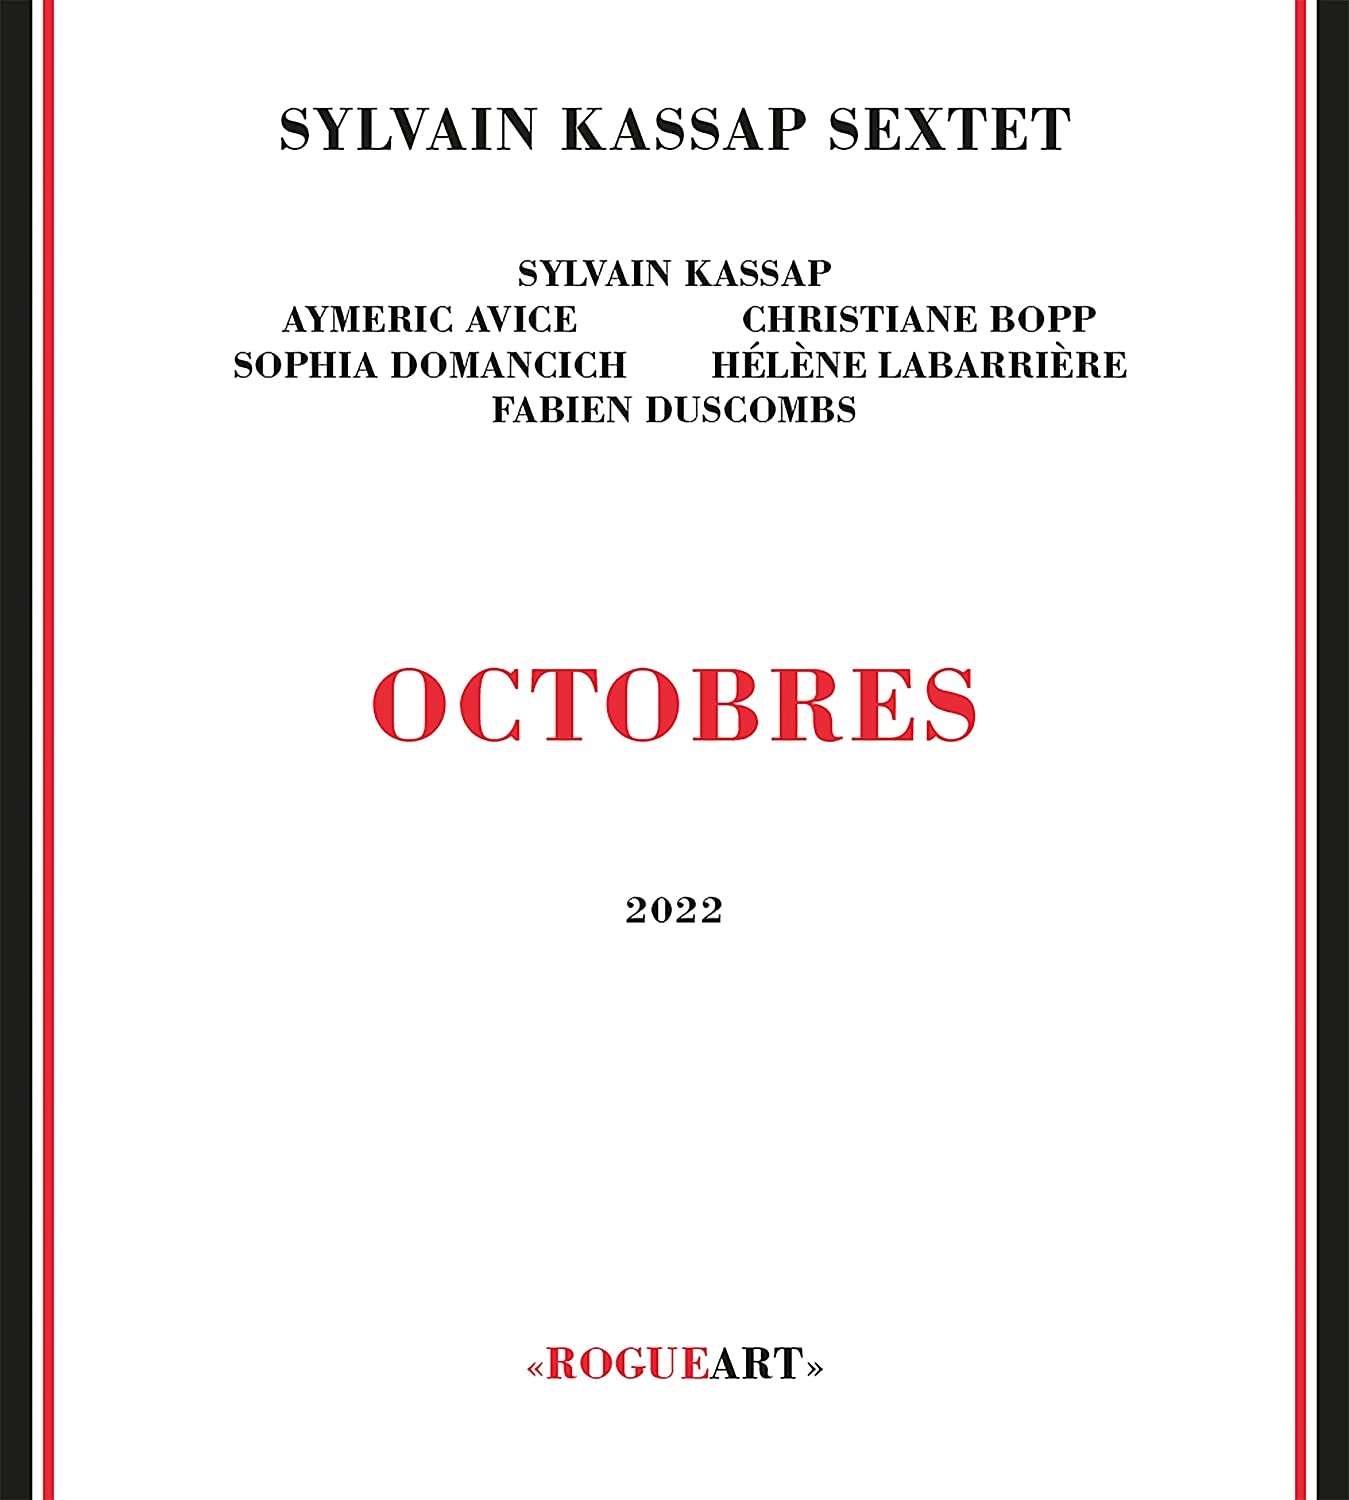 SYLVAIN KASSAP - Sylvain Kassap Sextet : Octobres cover 